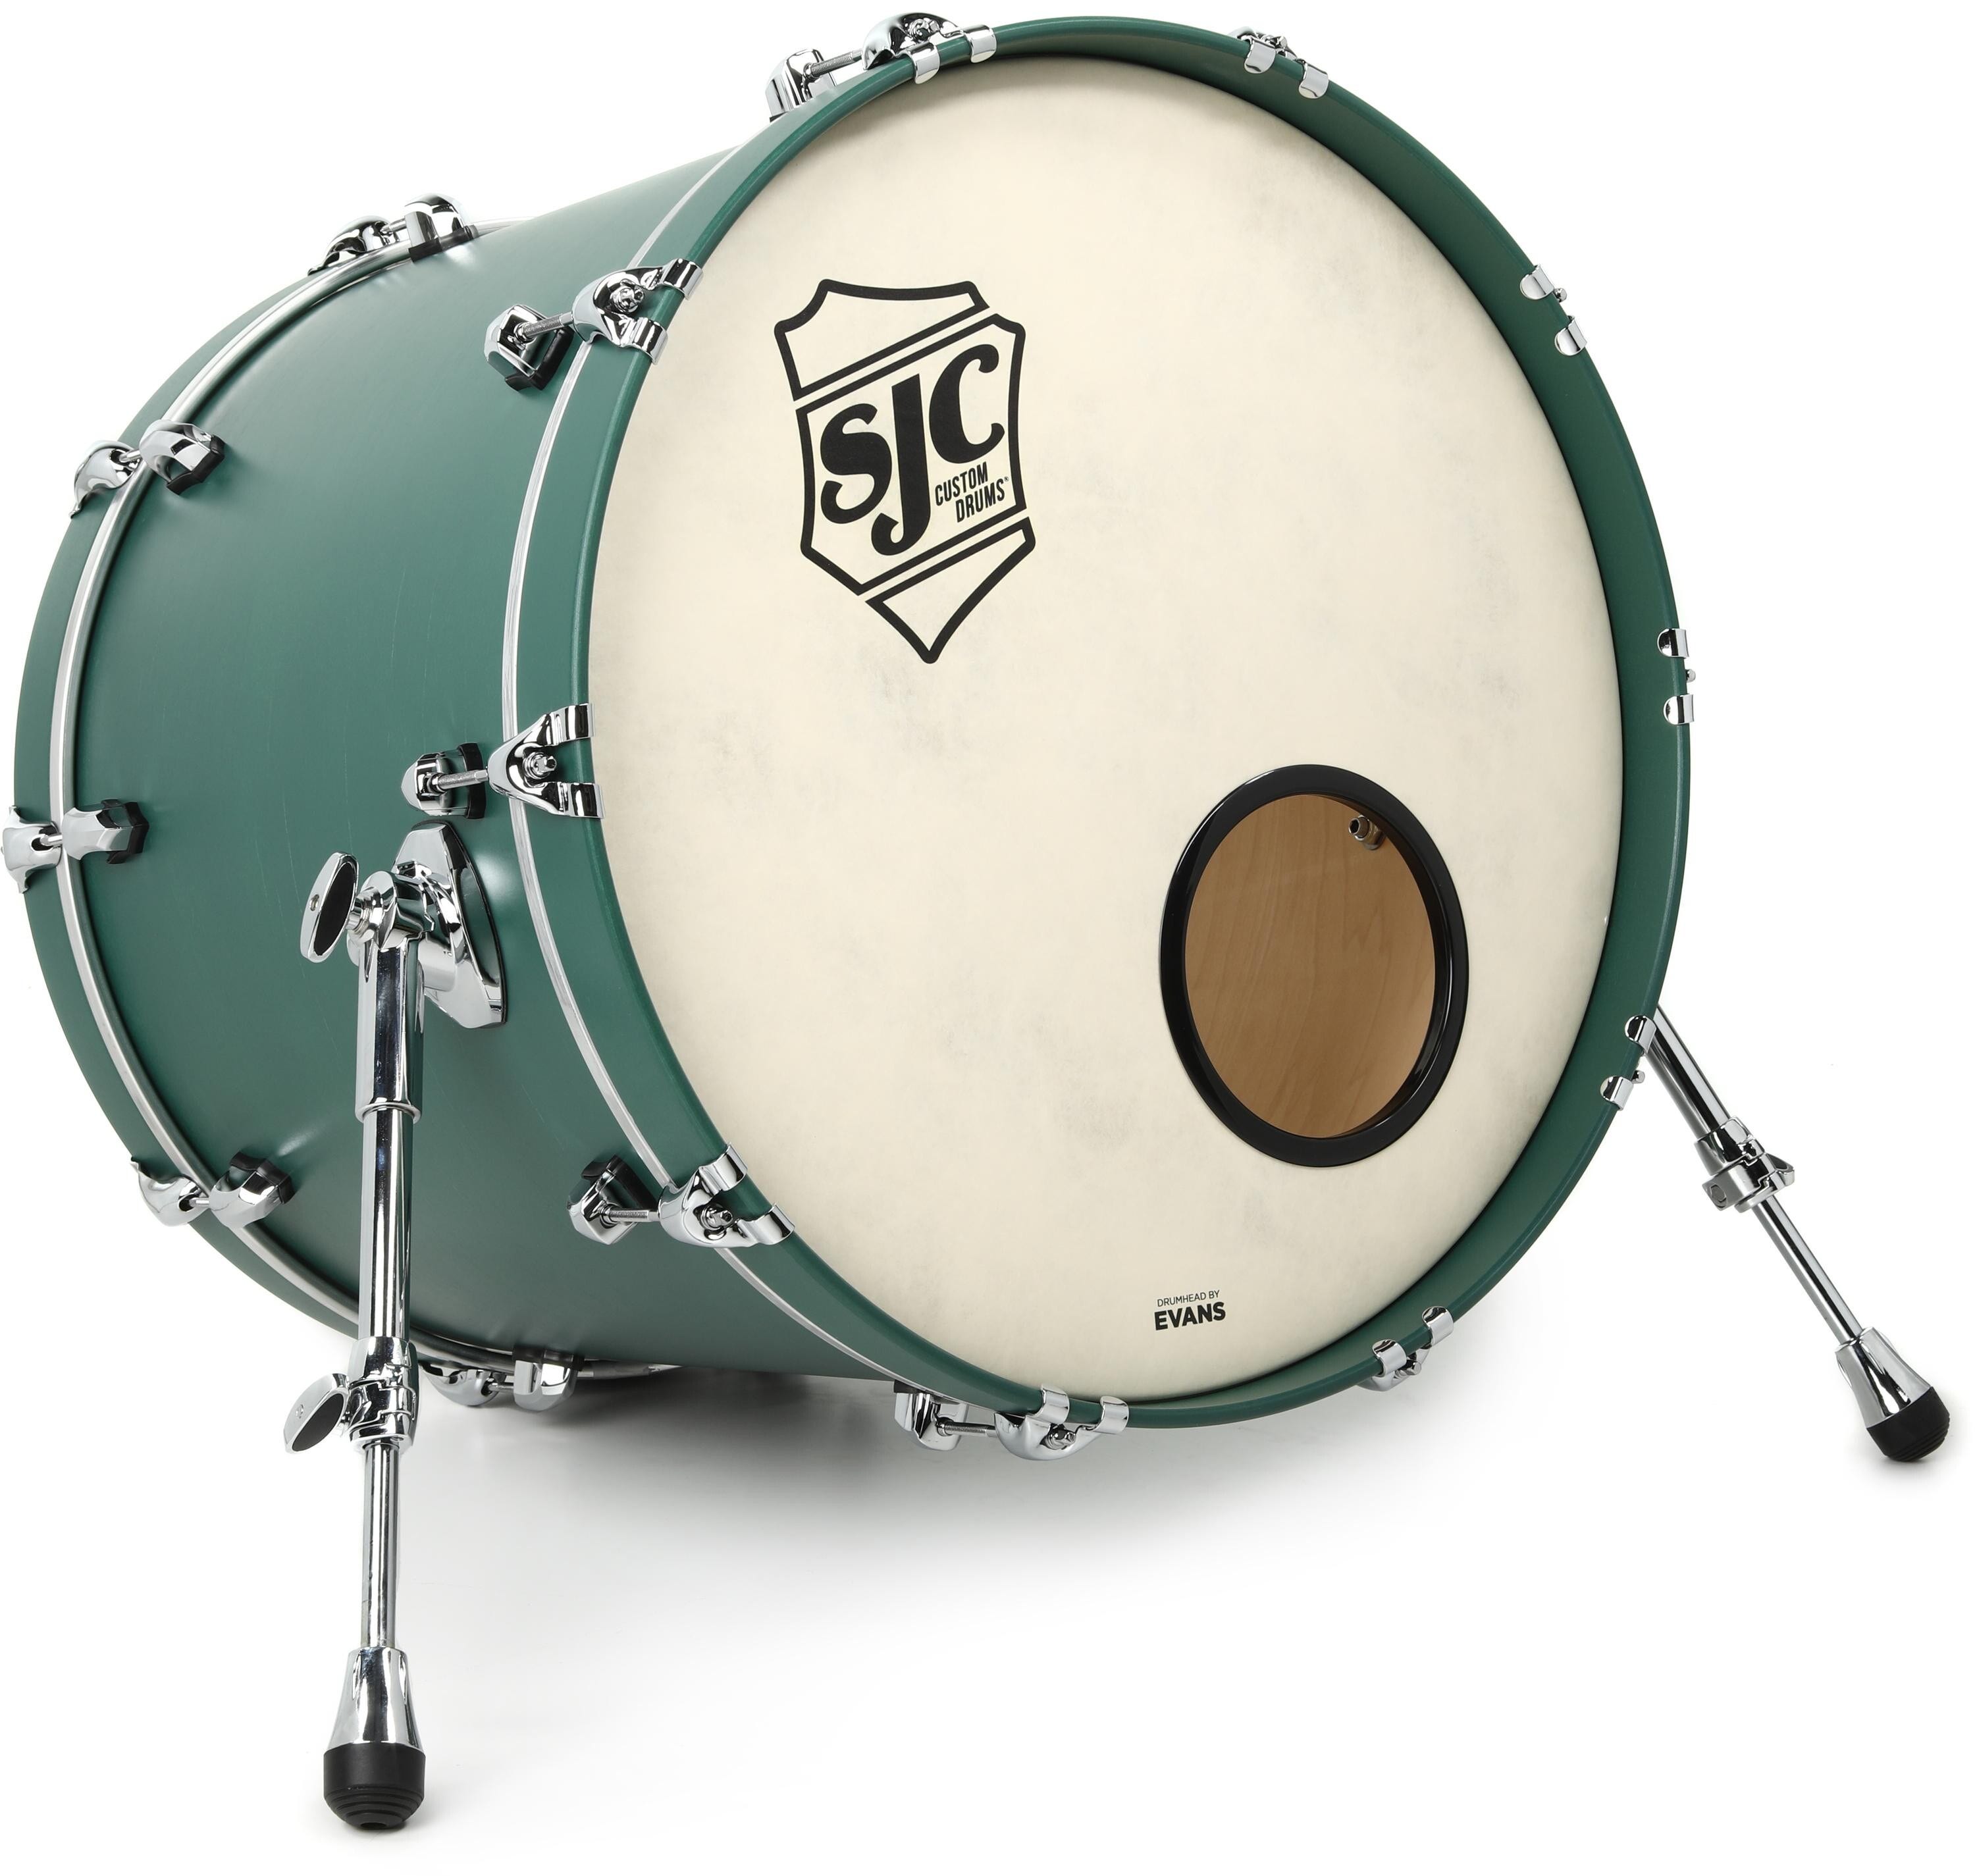 SJC Custom Drums Tour Series Bass Drum - 18 x 22-inch - Autumn